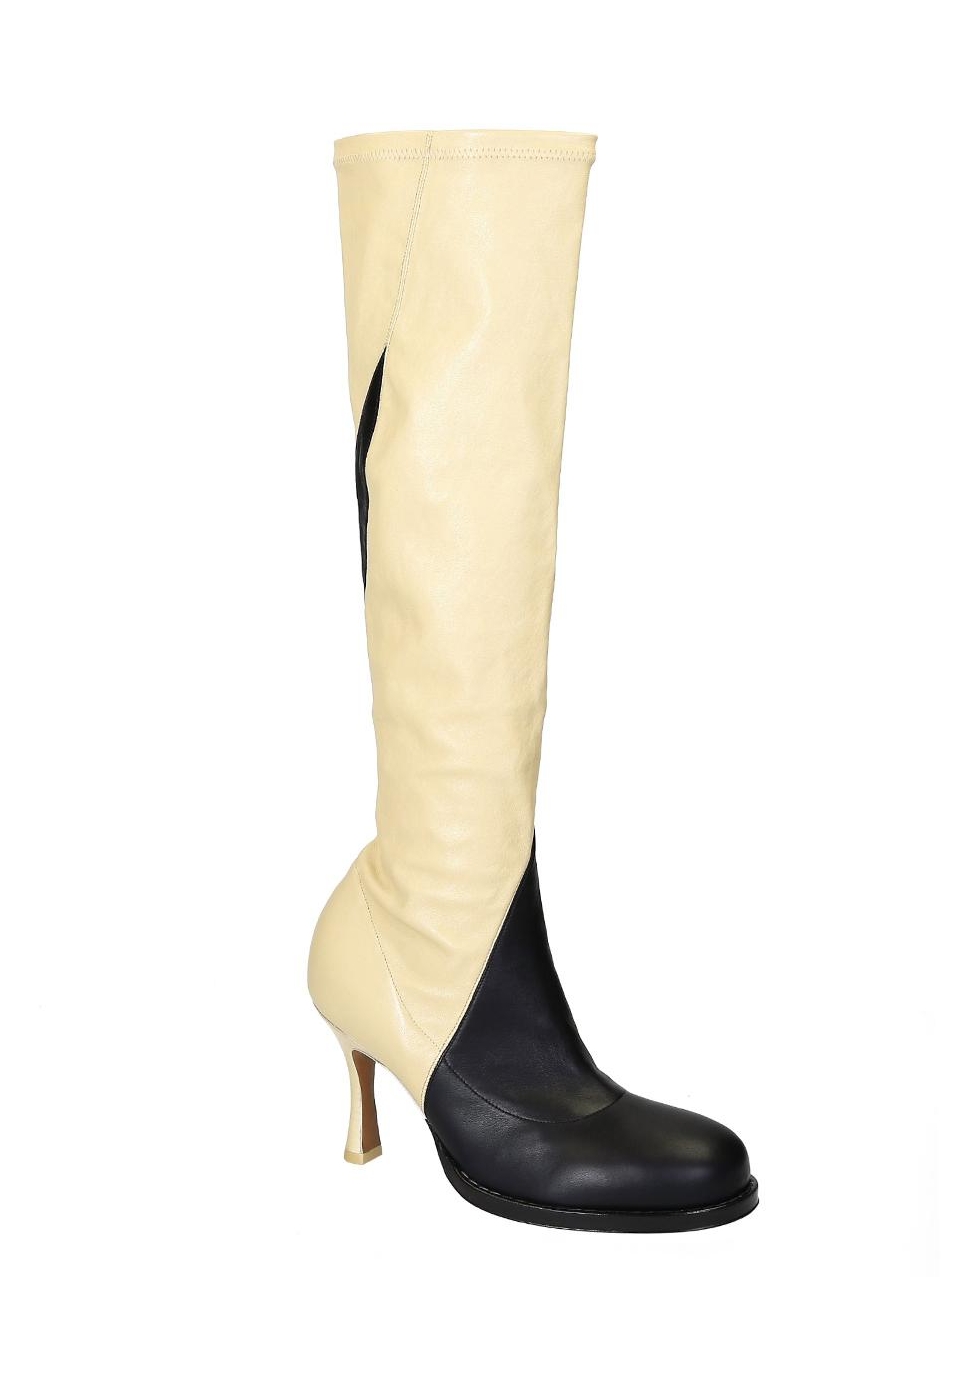 Céline knee high boots in black/off 